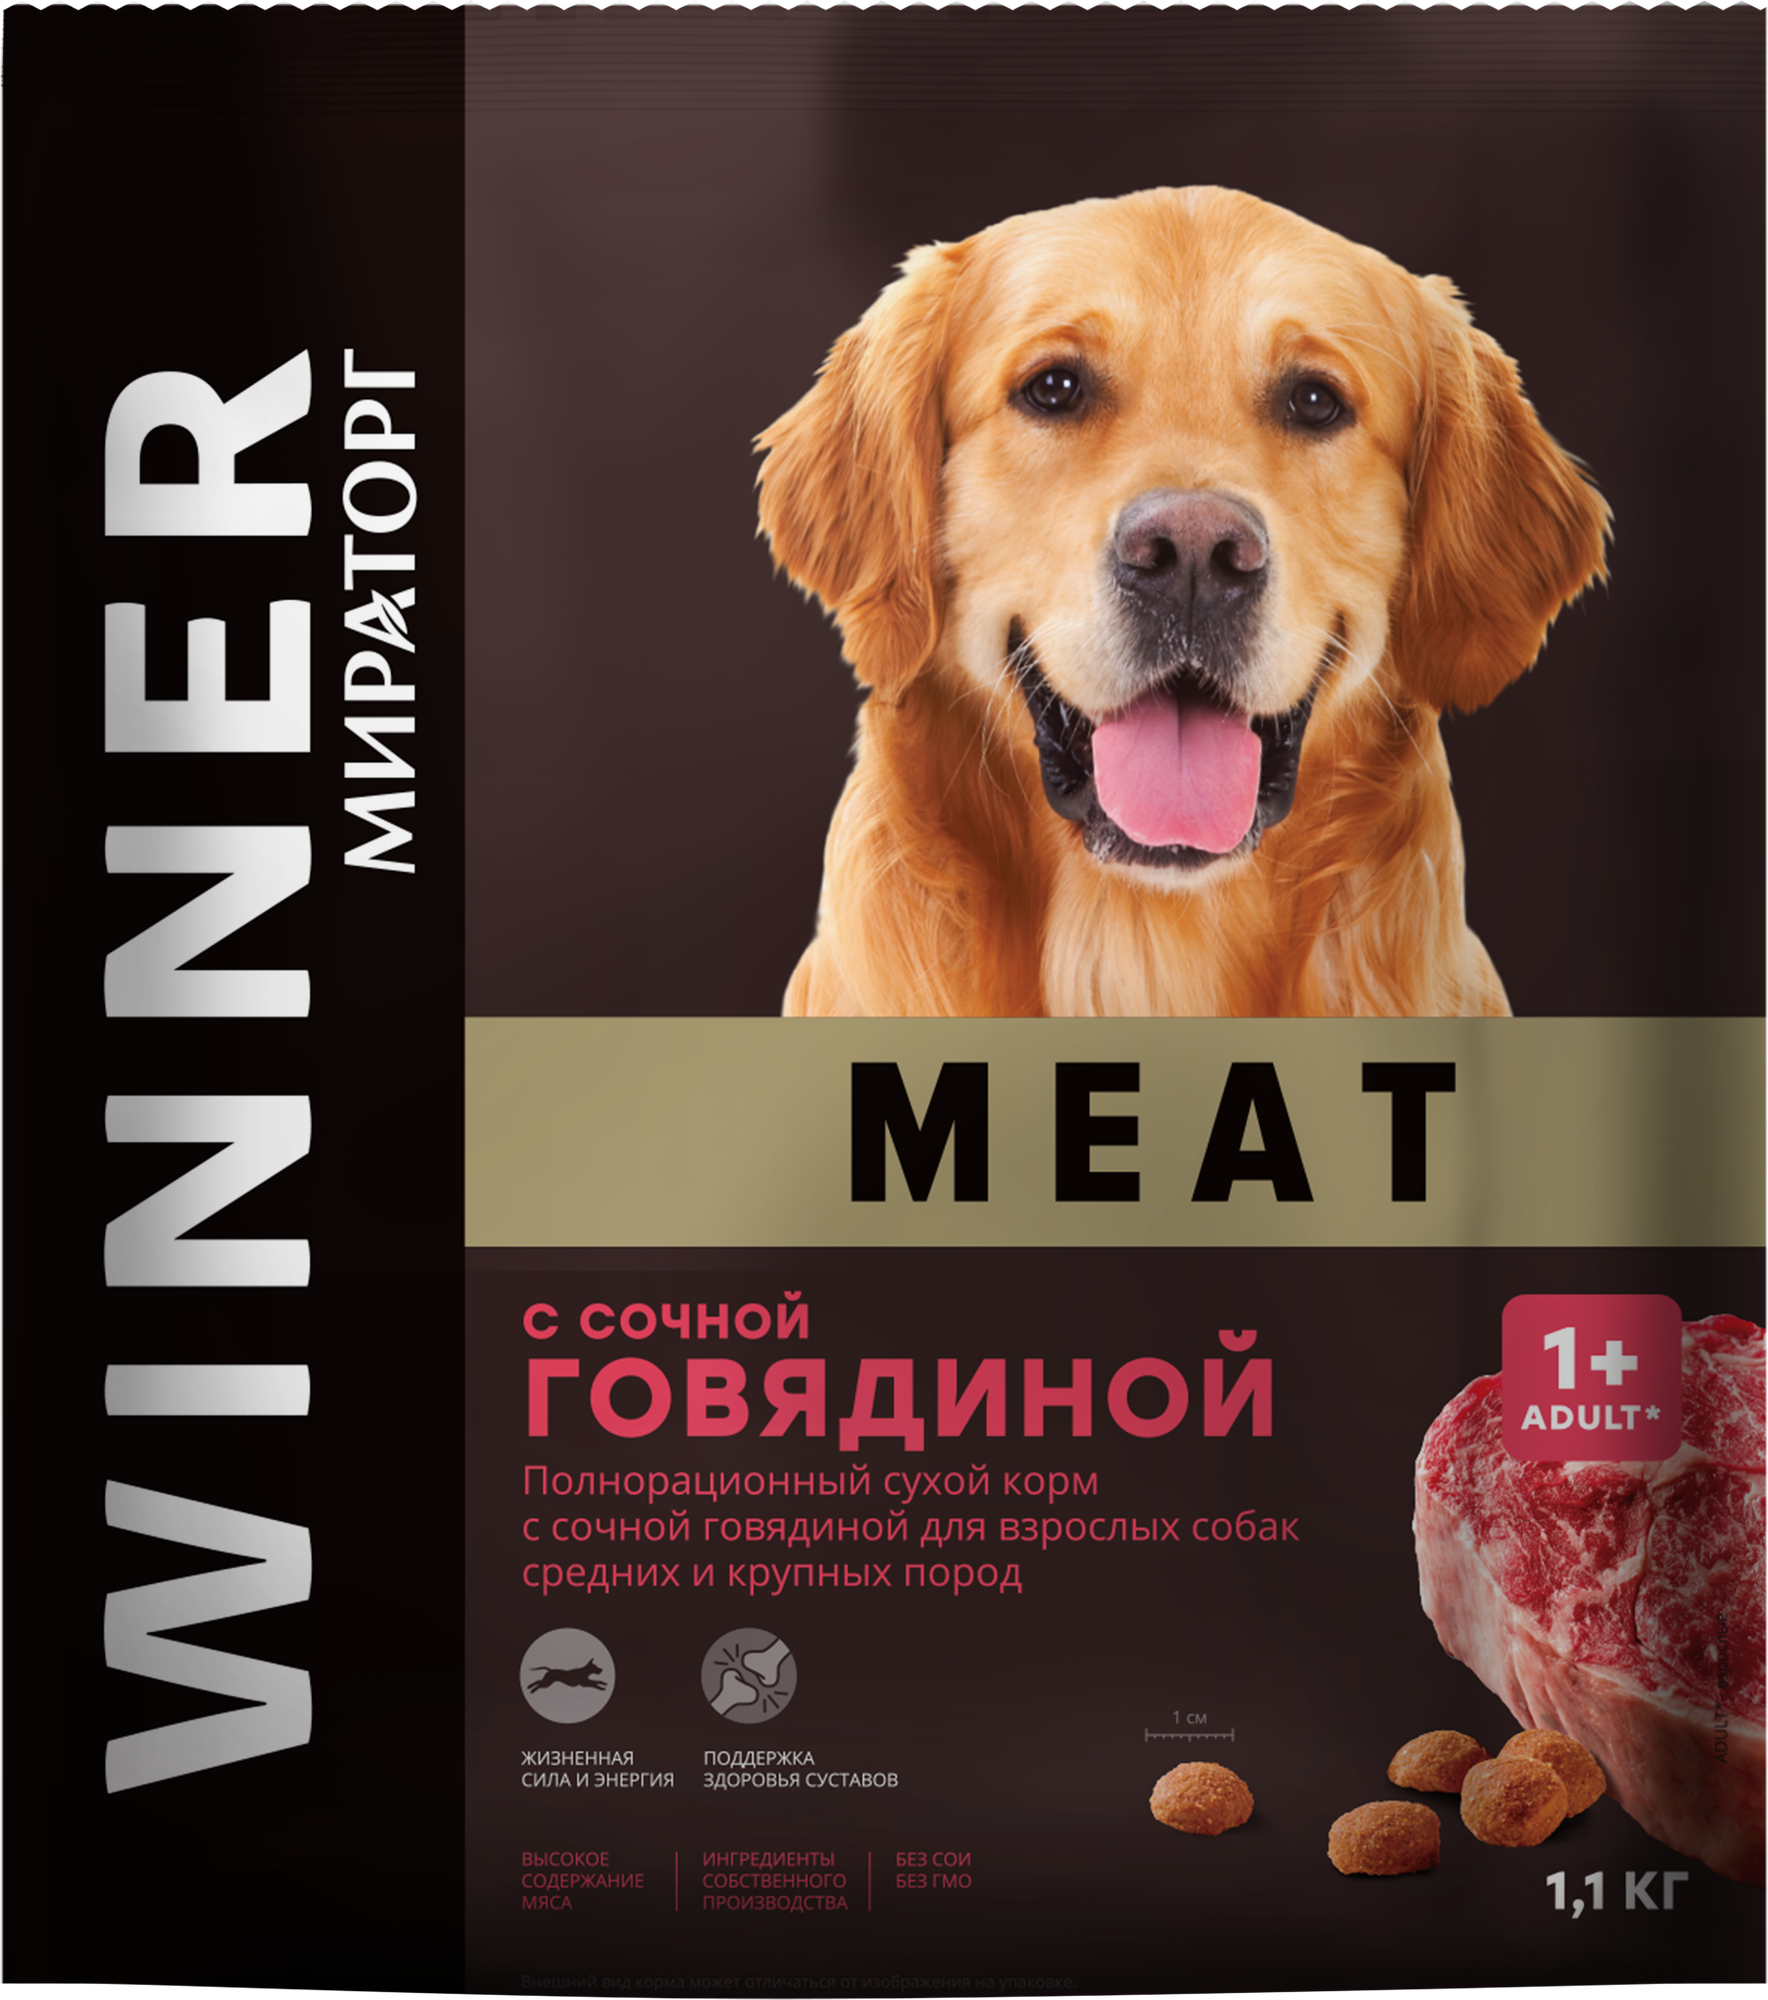 Сухой корм для собак Мираторг для здоровья костей и суставов, говядина 1 уп. х 1 шт. х 1.1 кг